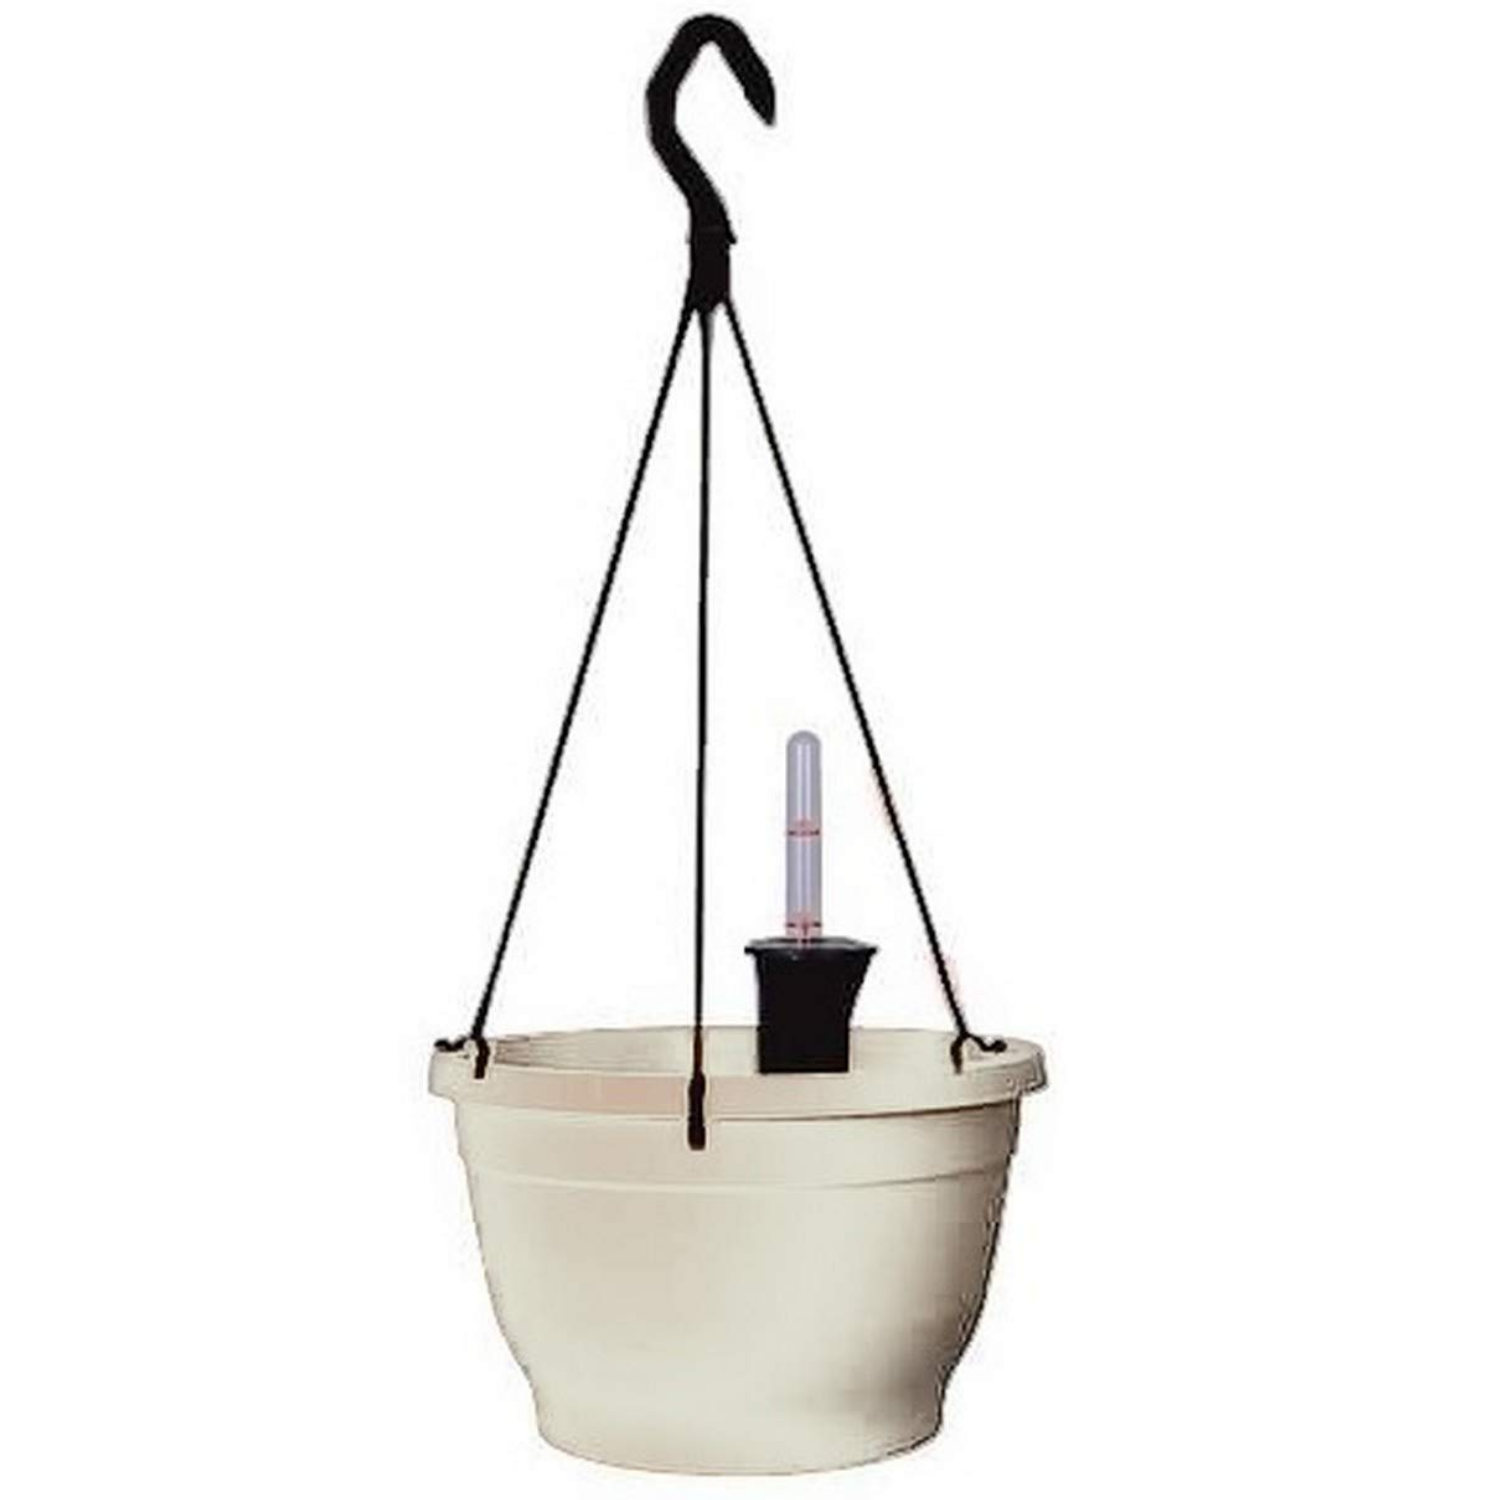 Tuka 25 Hanging Plastic Pot With Self Watering KIt